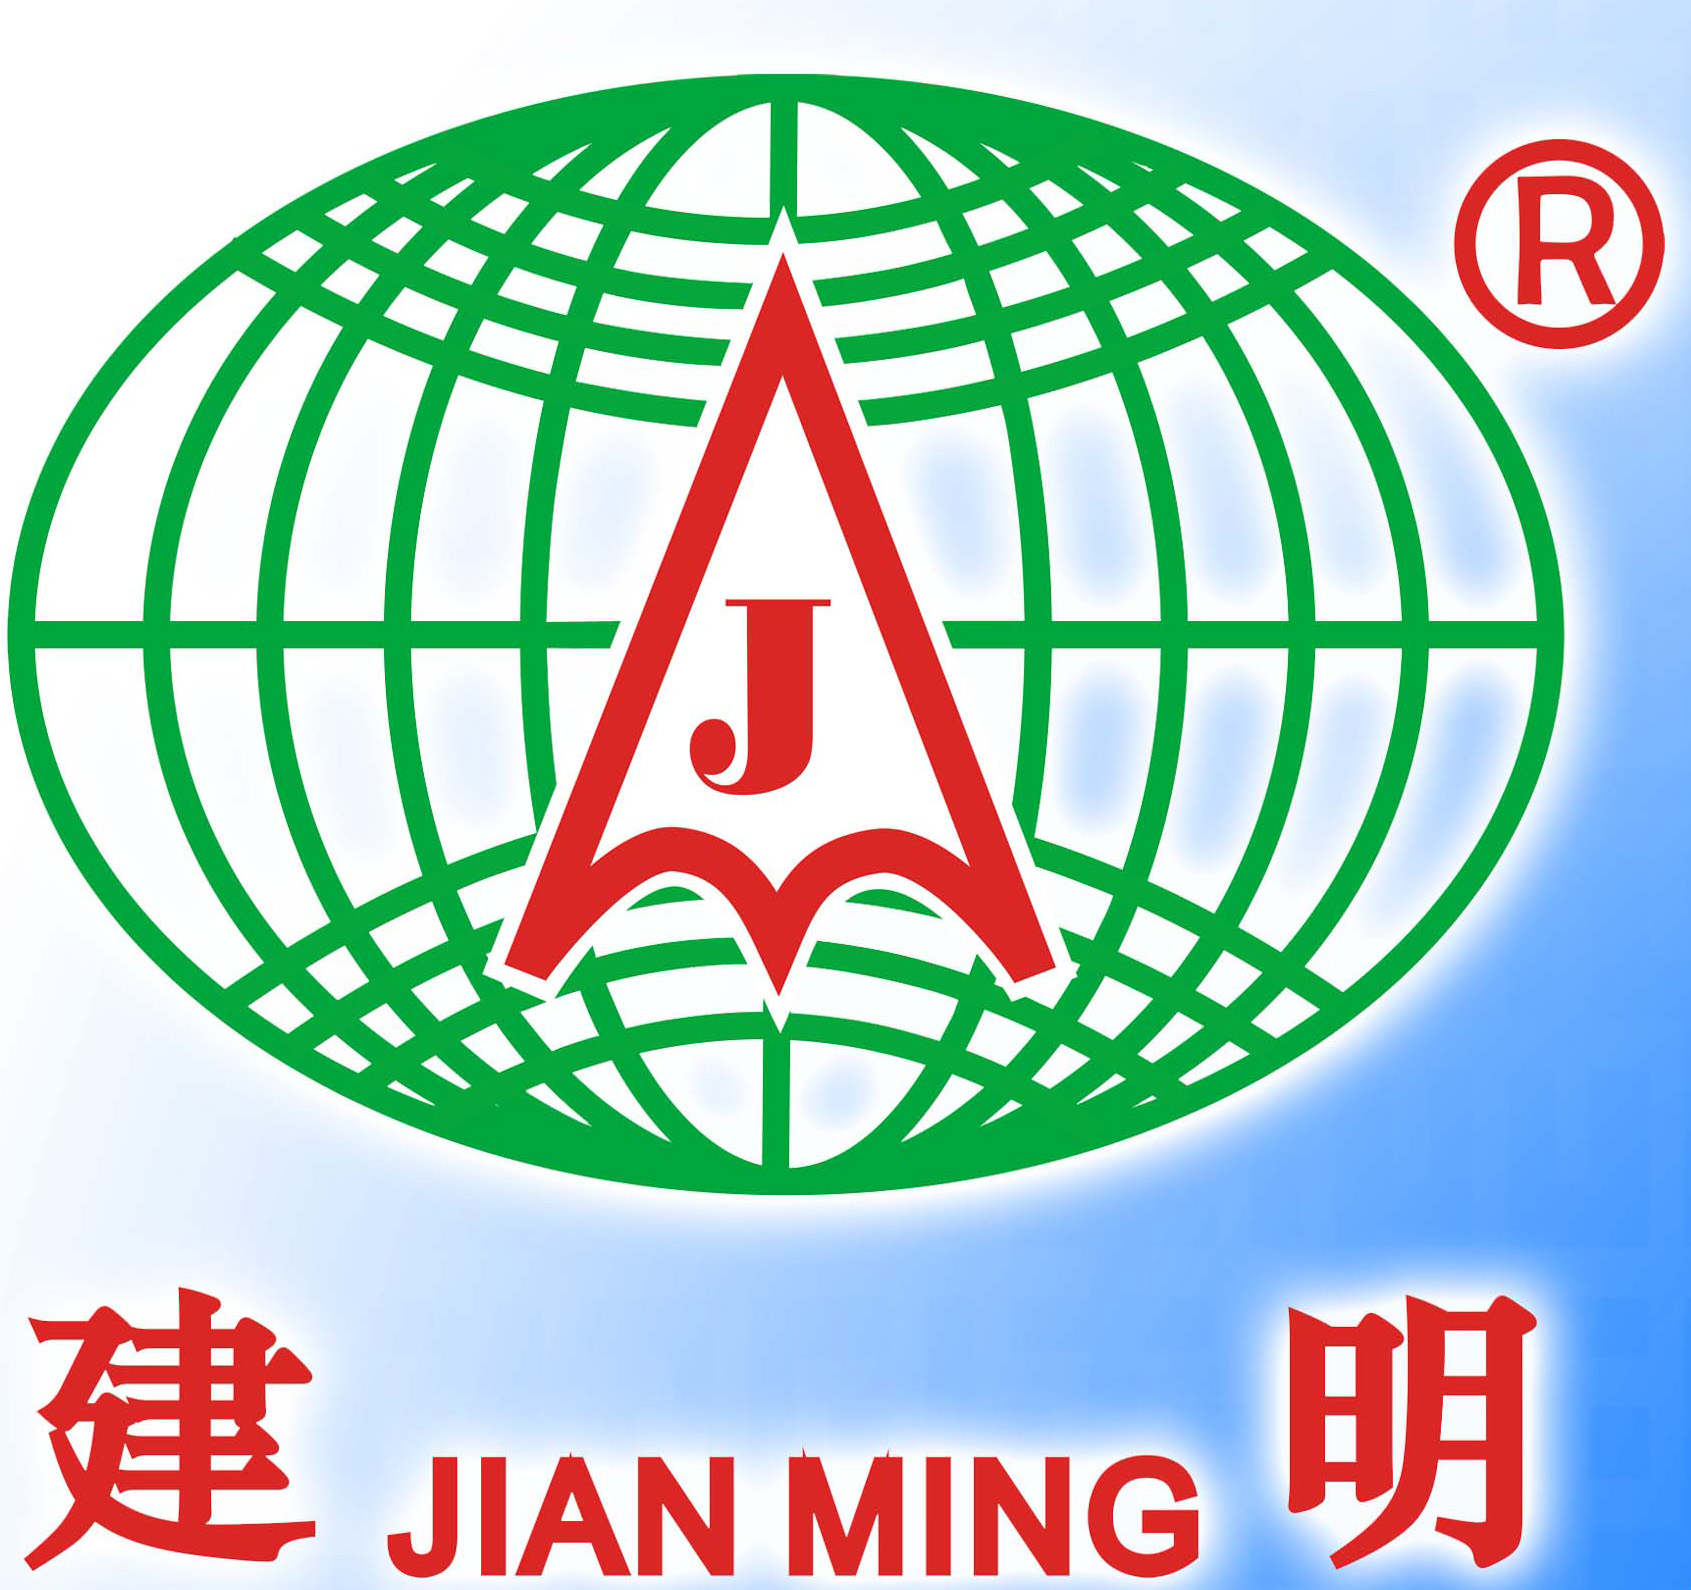 XINGNING JIAN MING ARTS & CRAFTS CO., LTD